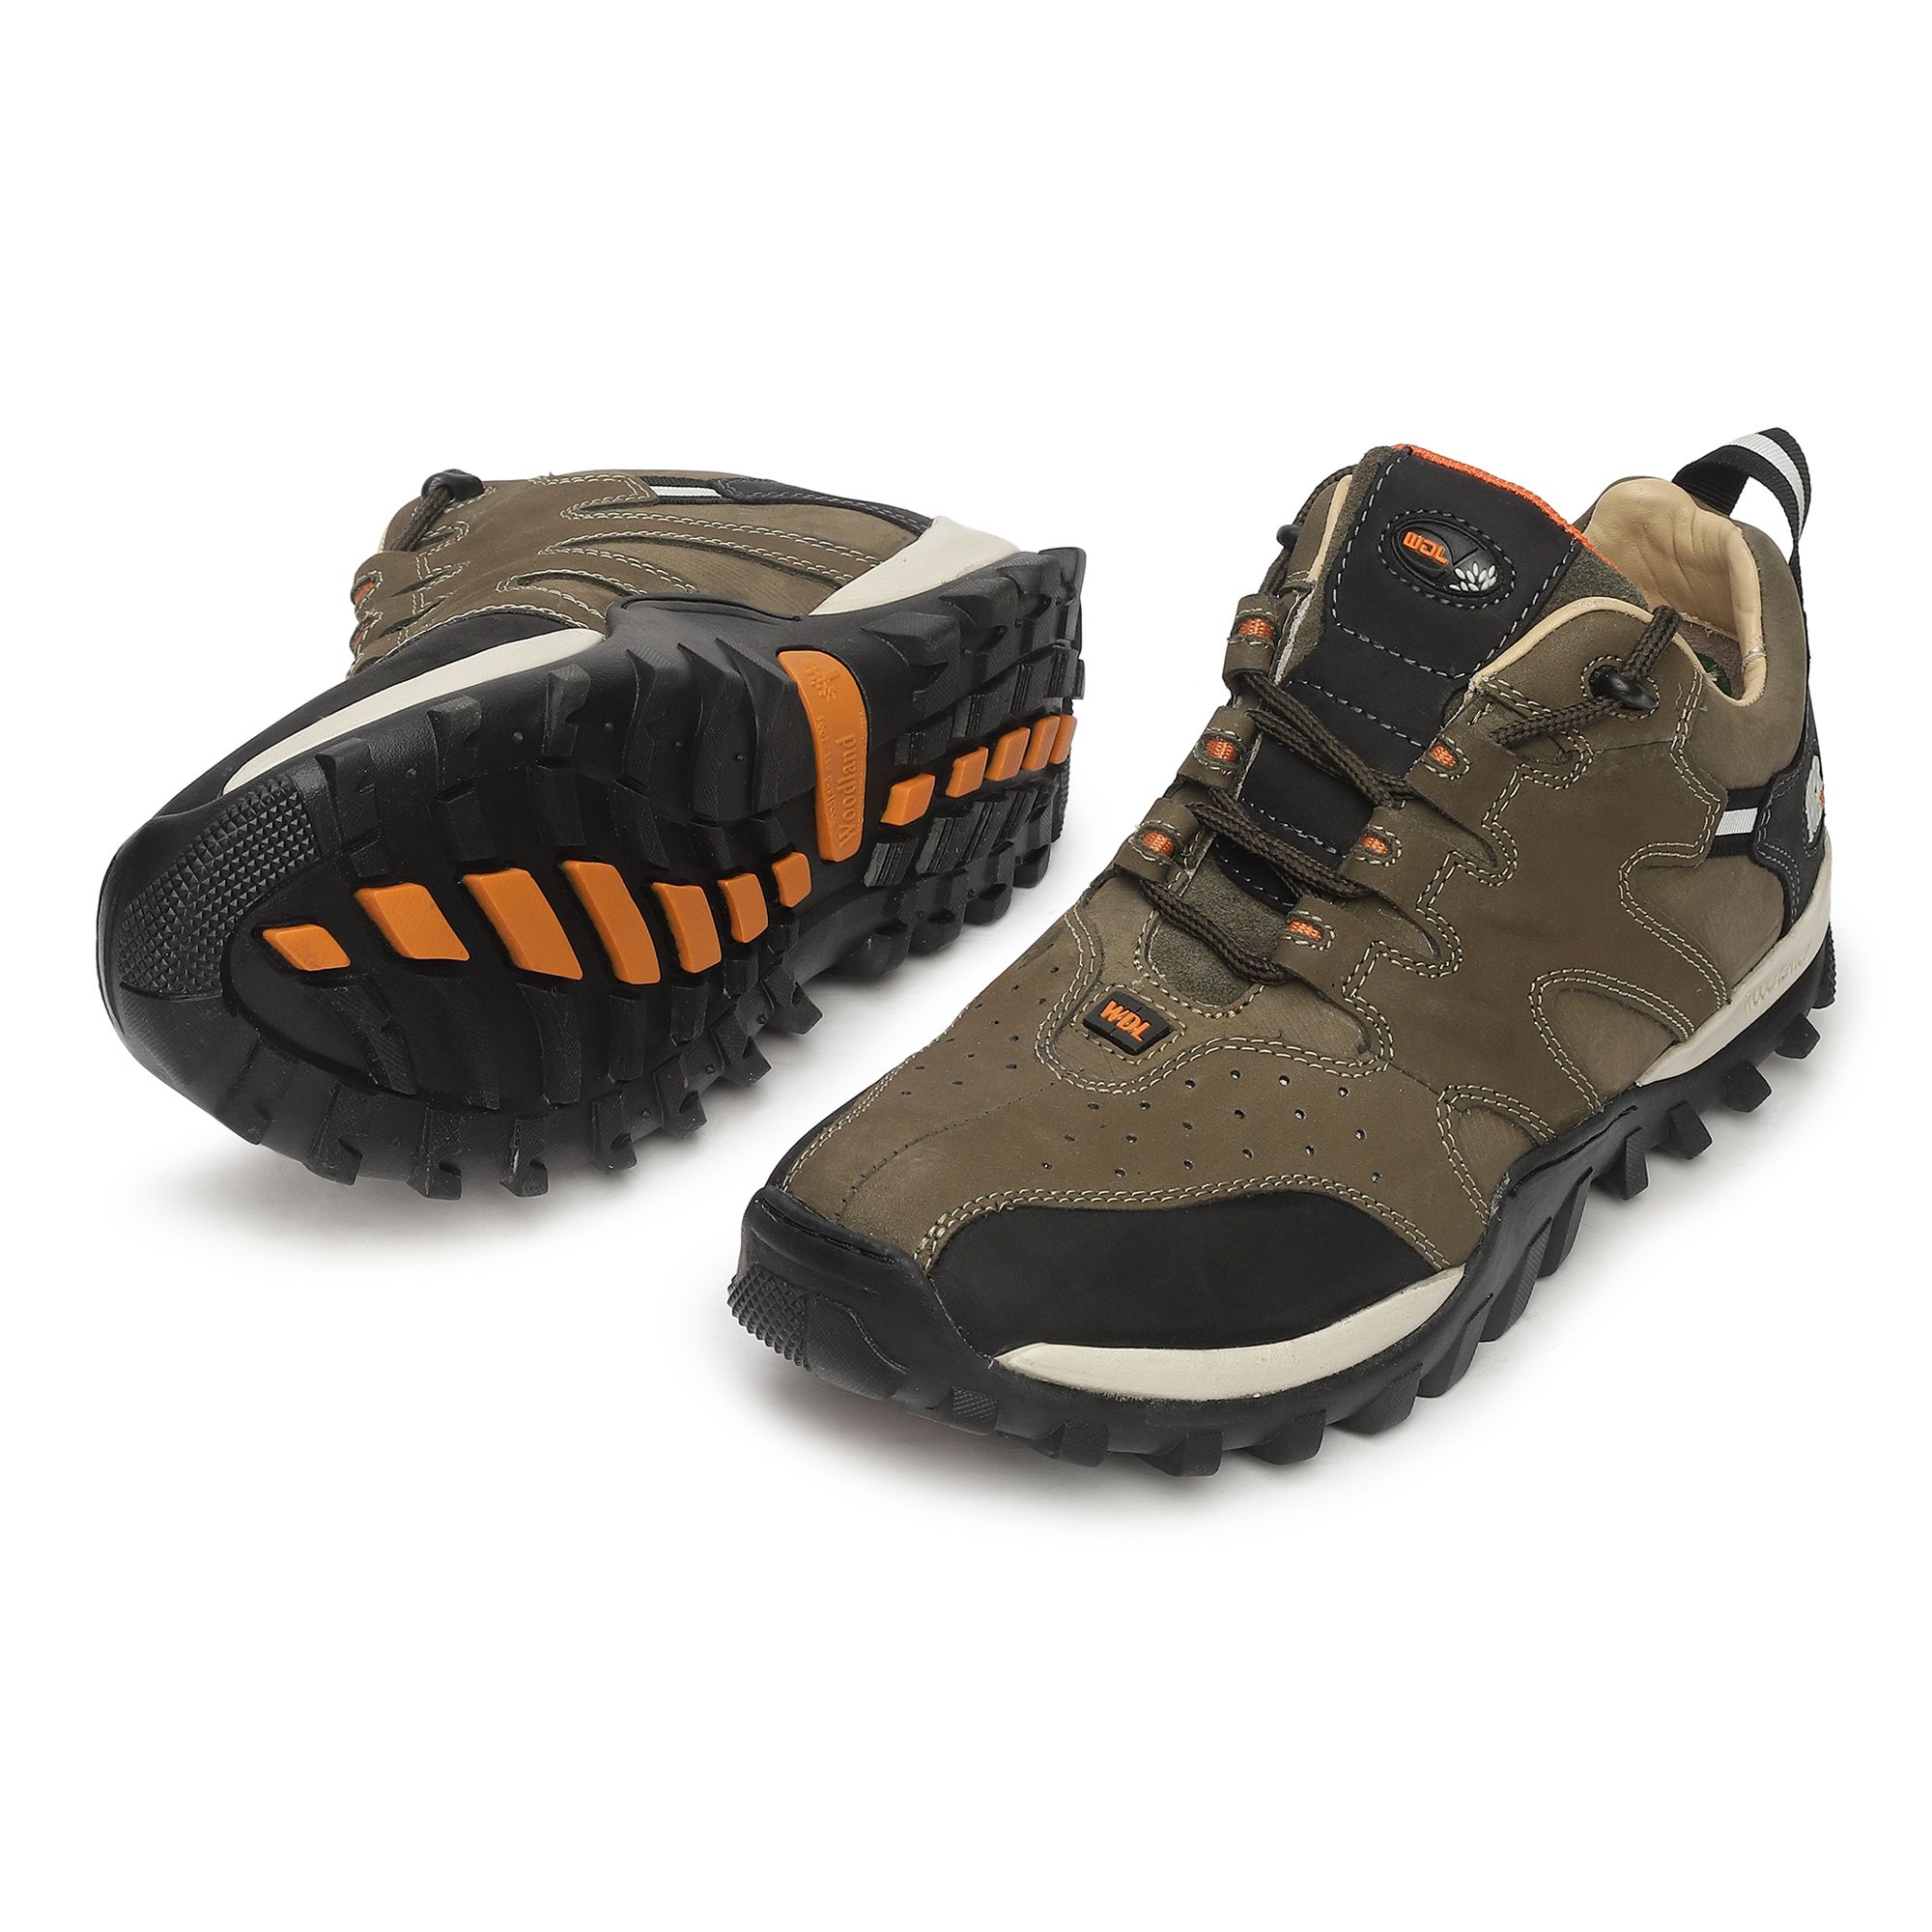 Buy Woodland Mens Gc 2917118 Sneaker at Amazon.in